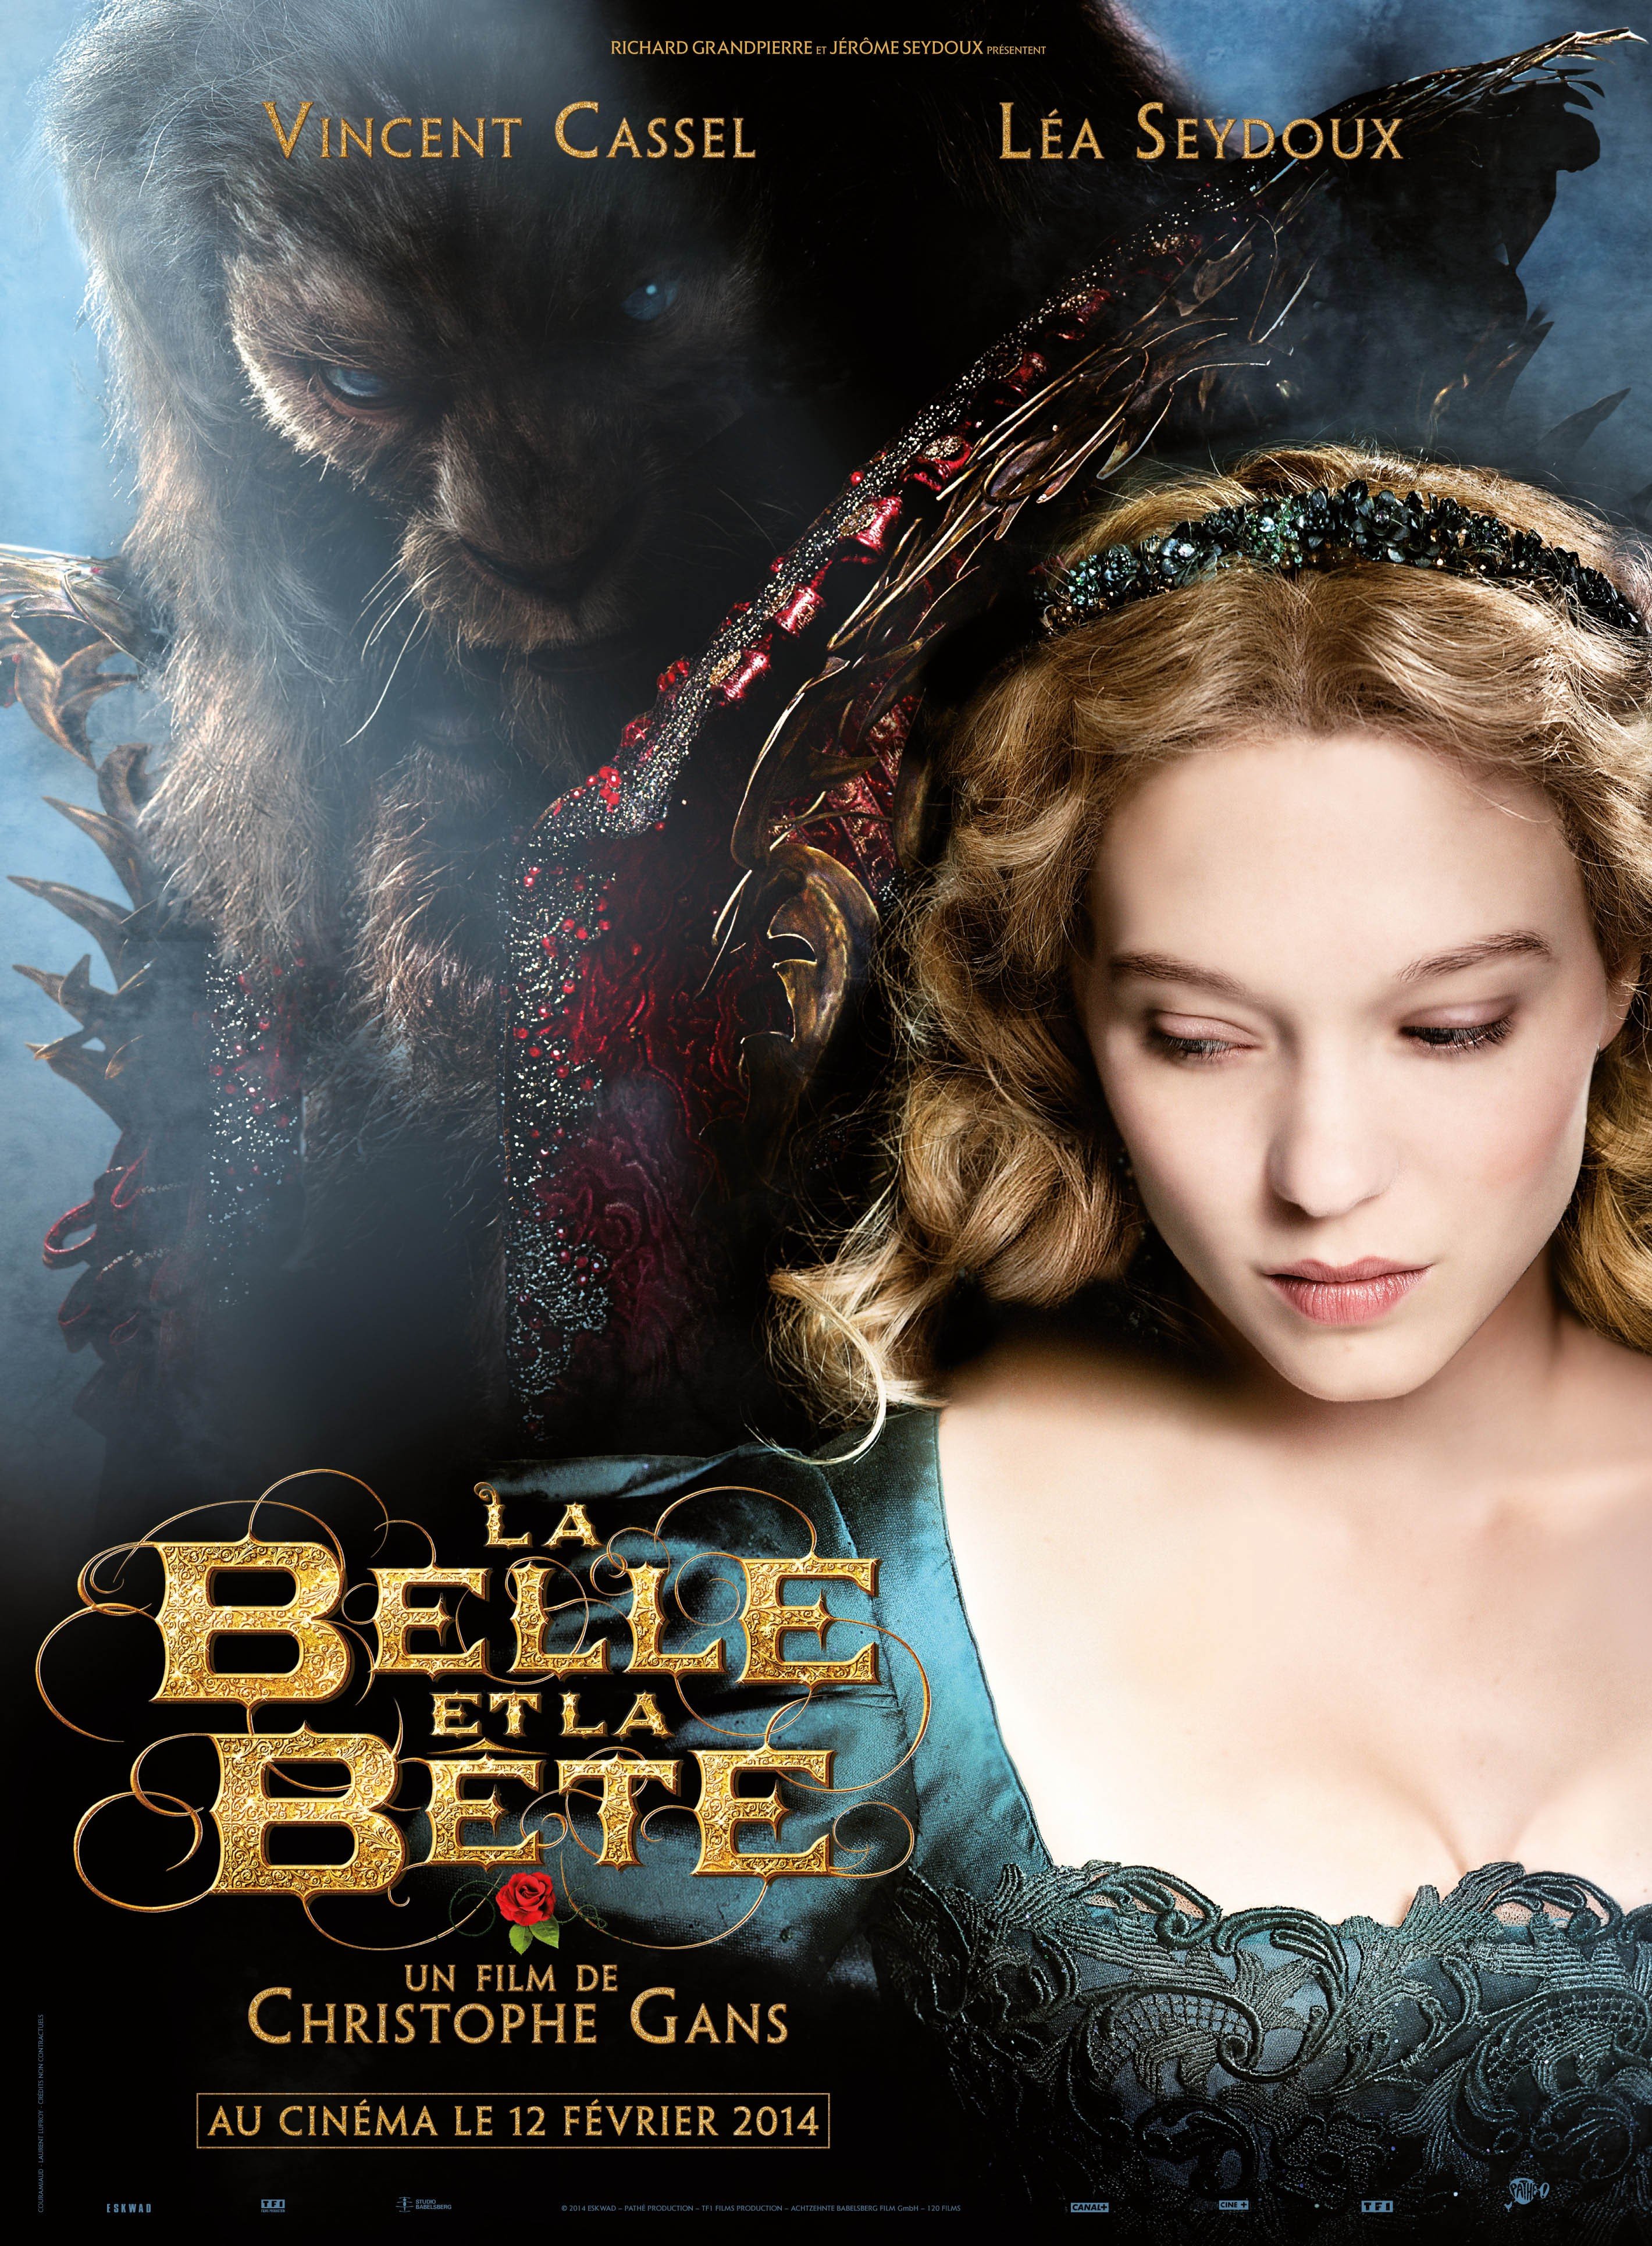 Léa Seydoux, Actress, Blonde, Blue eyes, Beauty and the Beast, La Belle